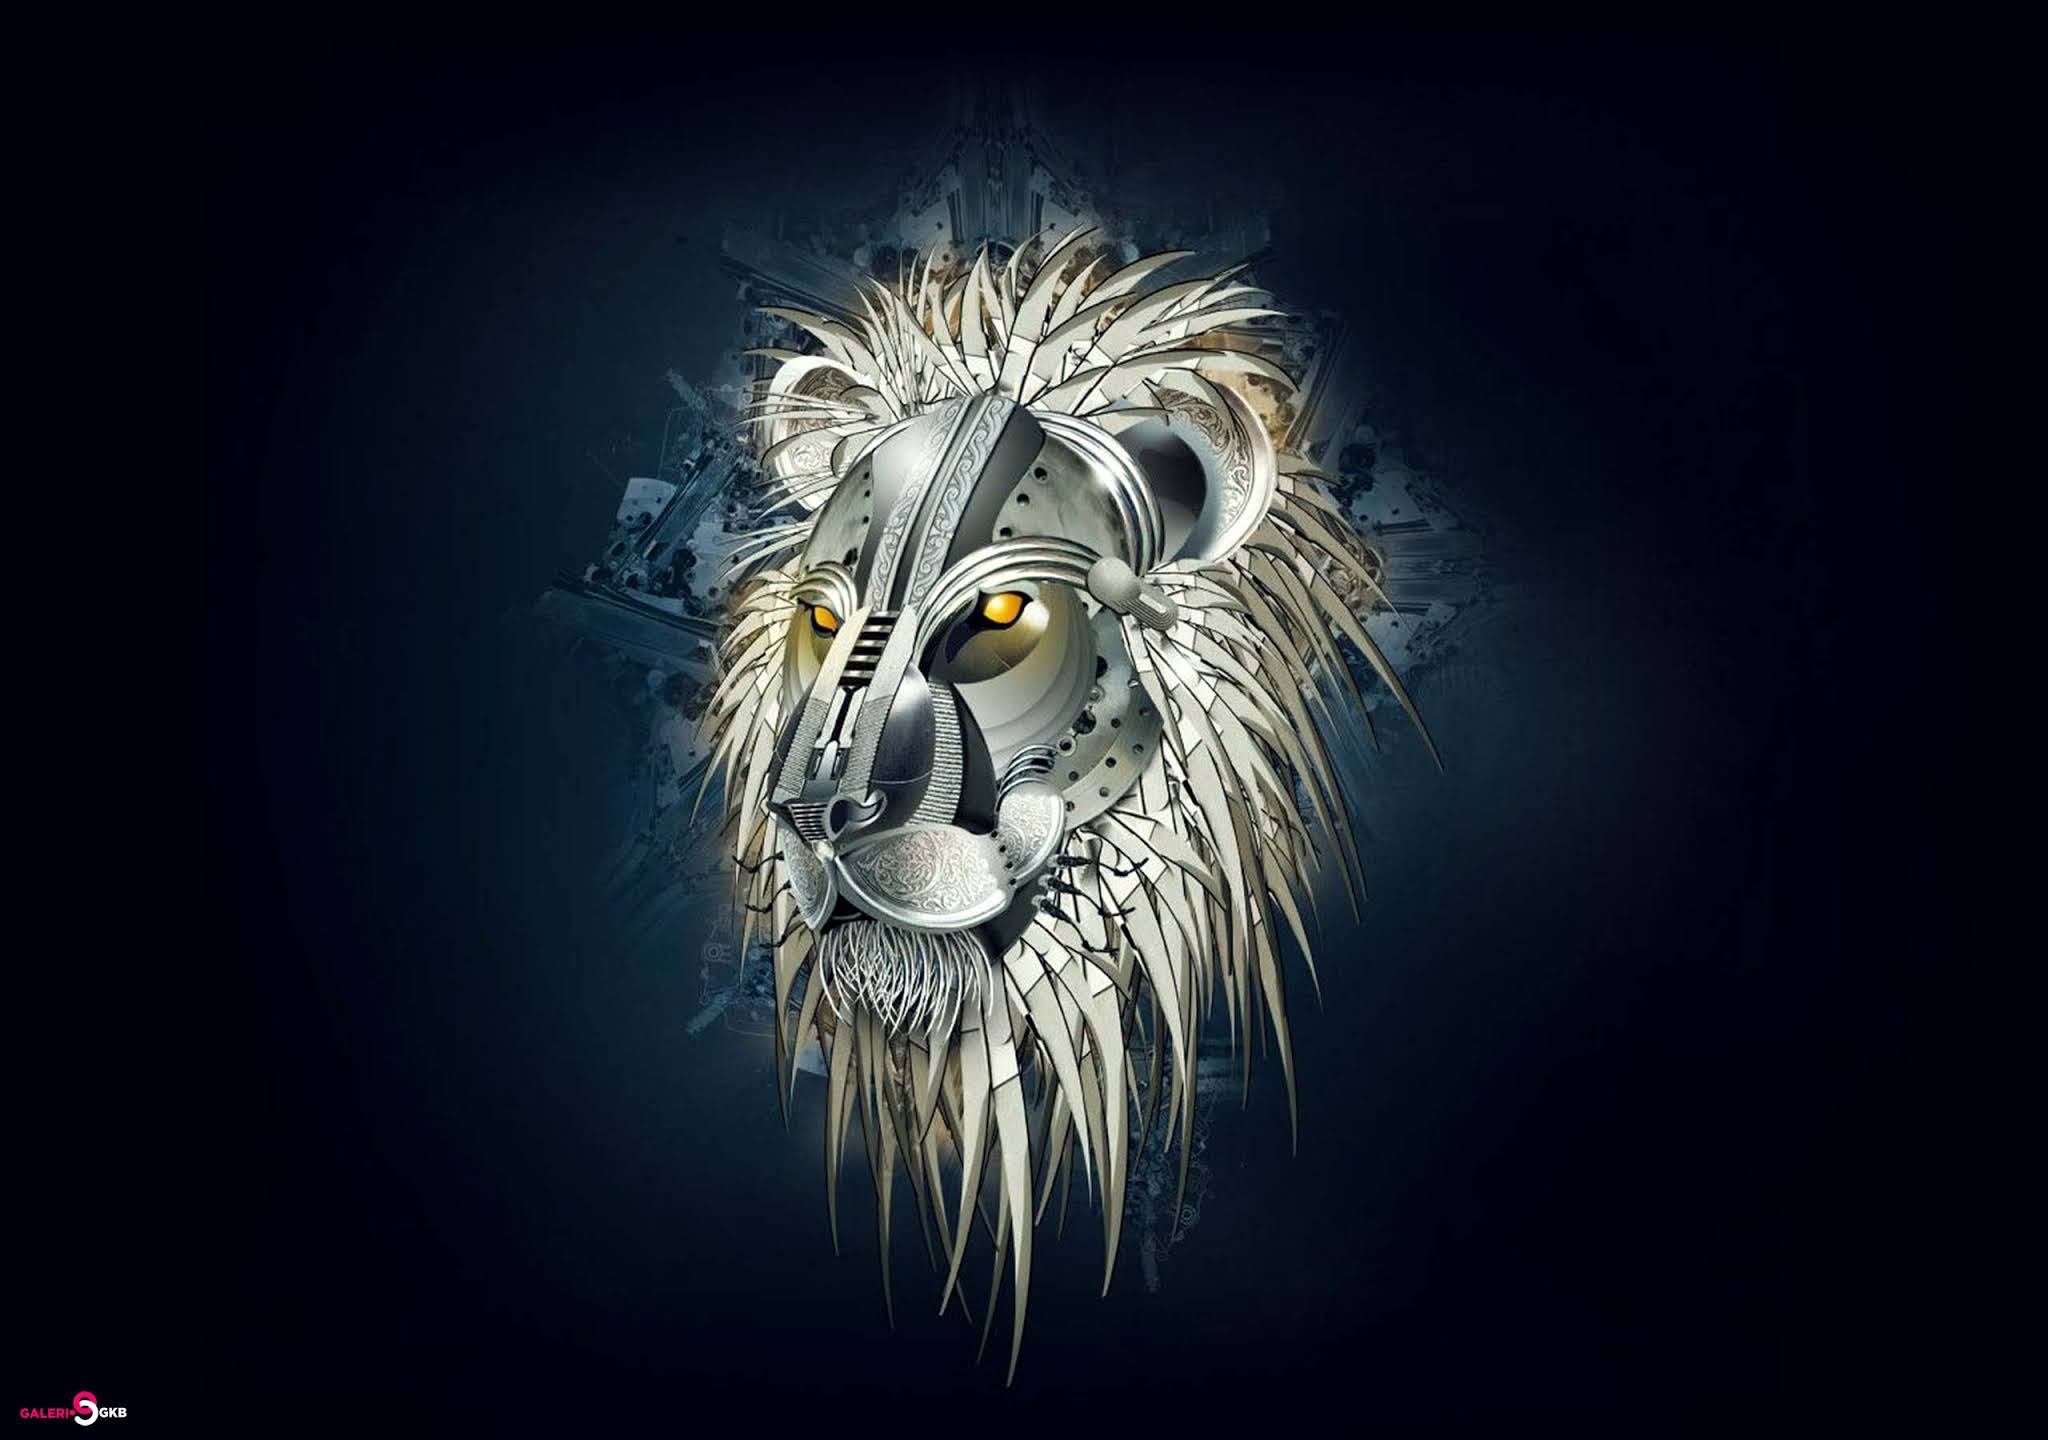 Grapich Lion Wallpaper HD, Lion Art Colorfull Wallpaper For Desktop PC